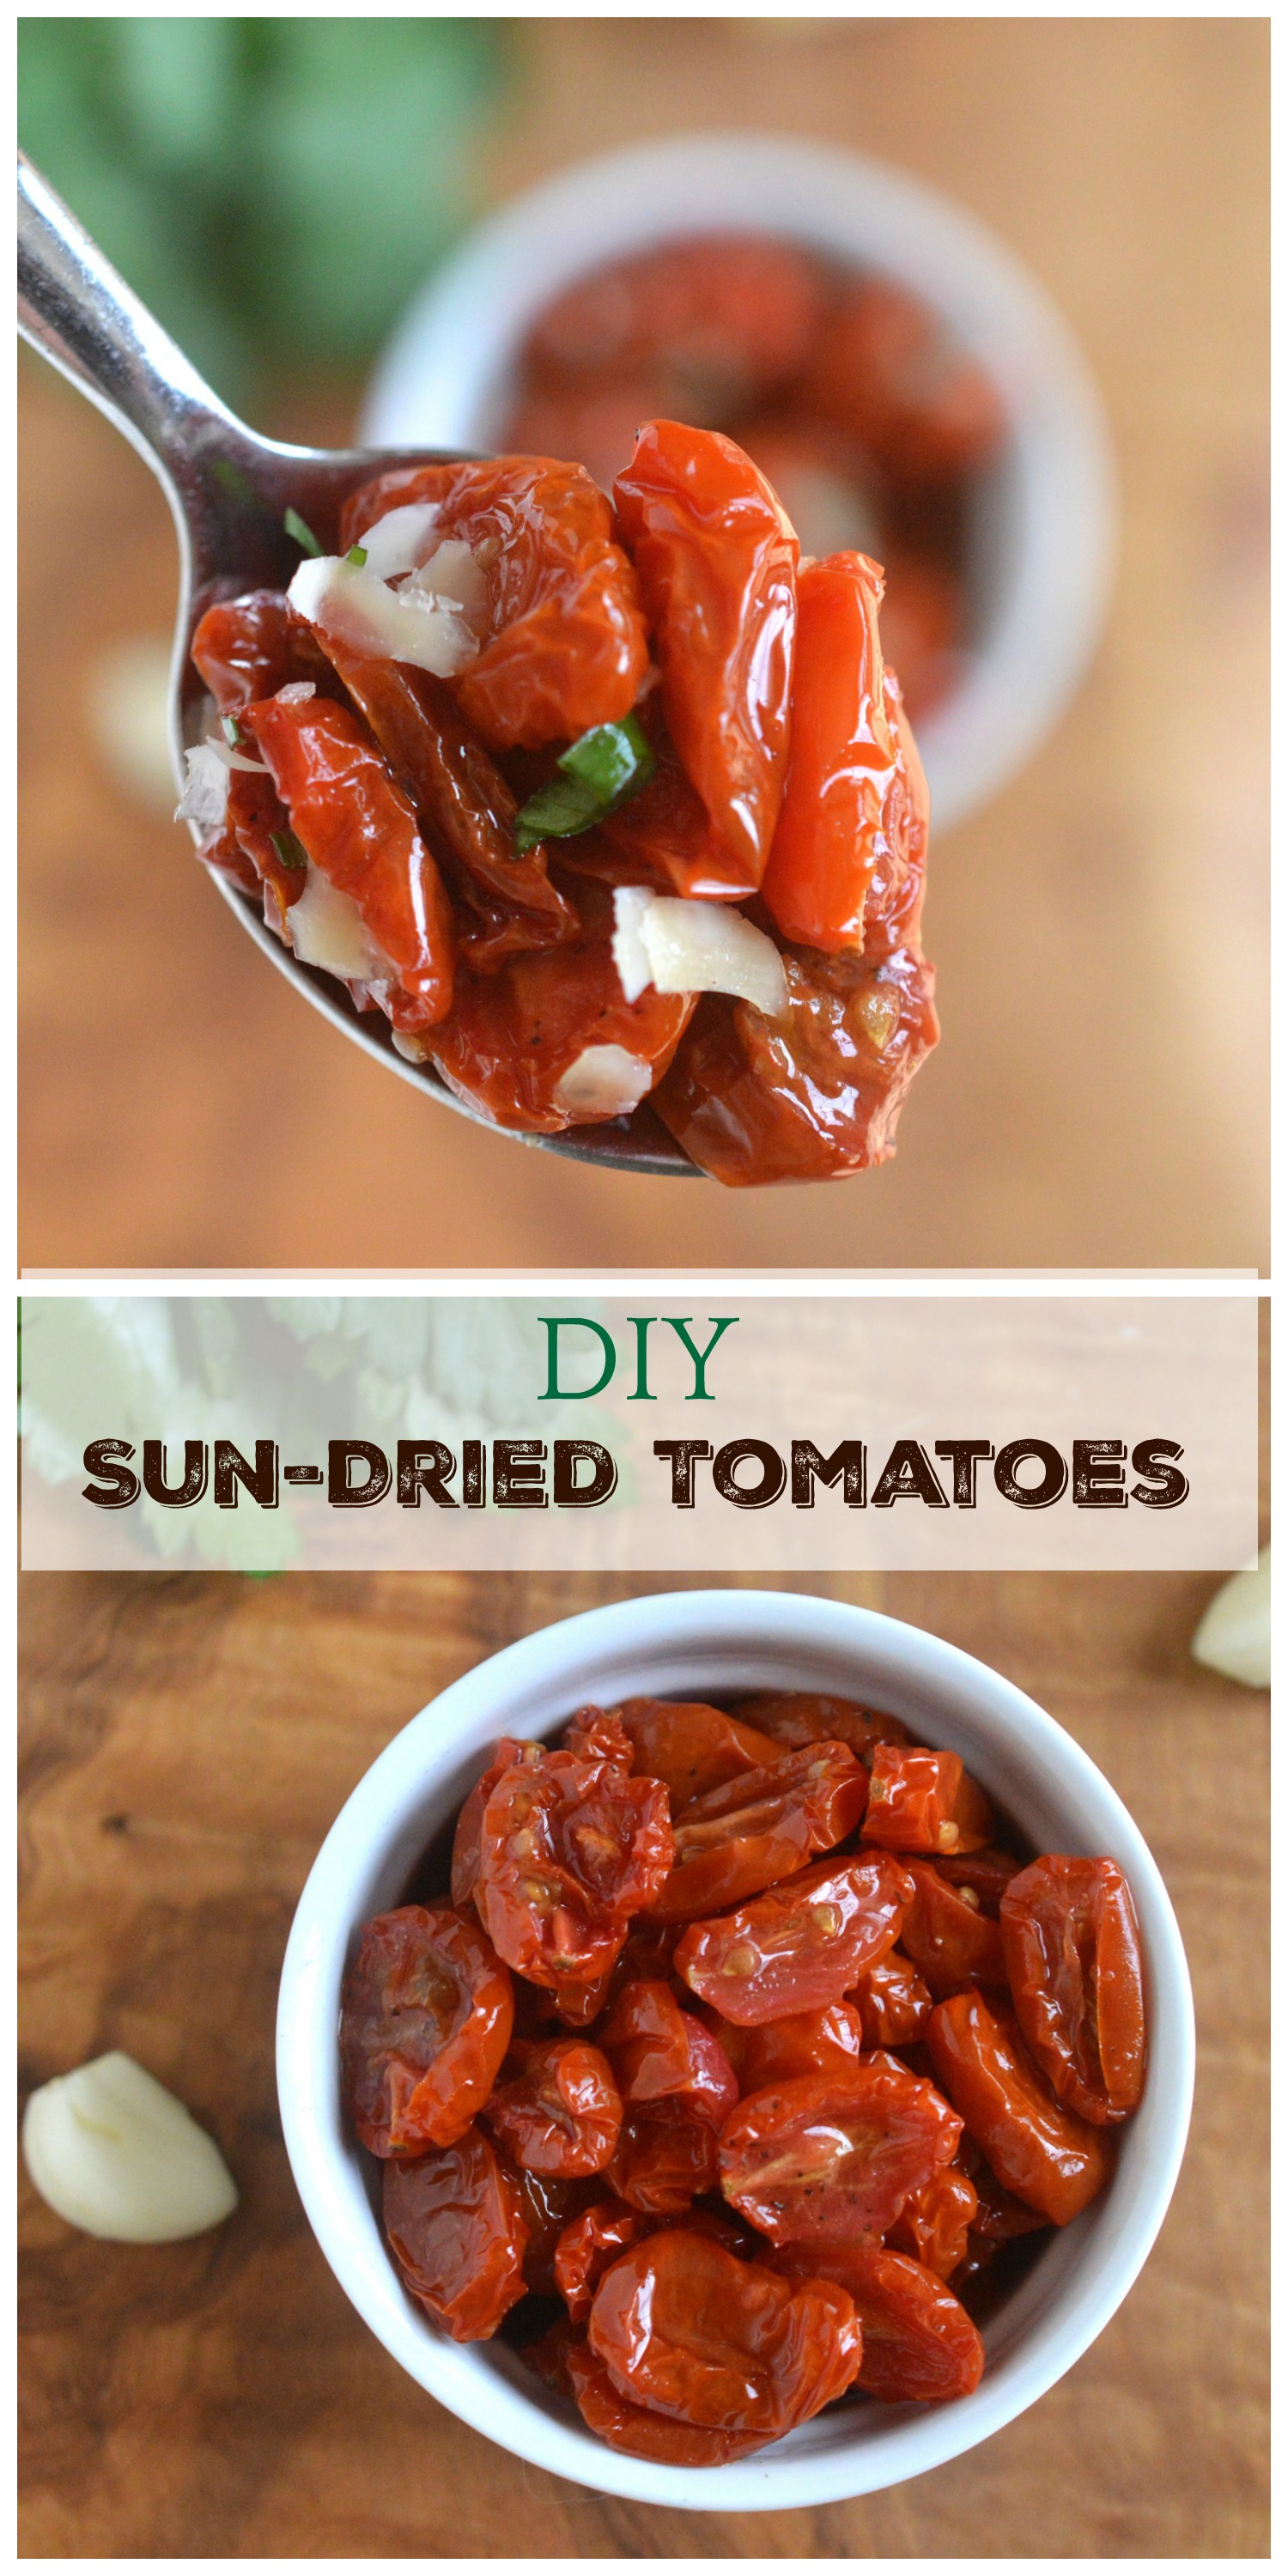 DIY How To Make Homemade Sun-Dried Tomatoes